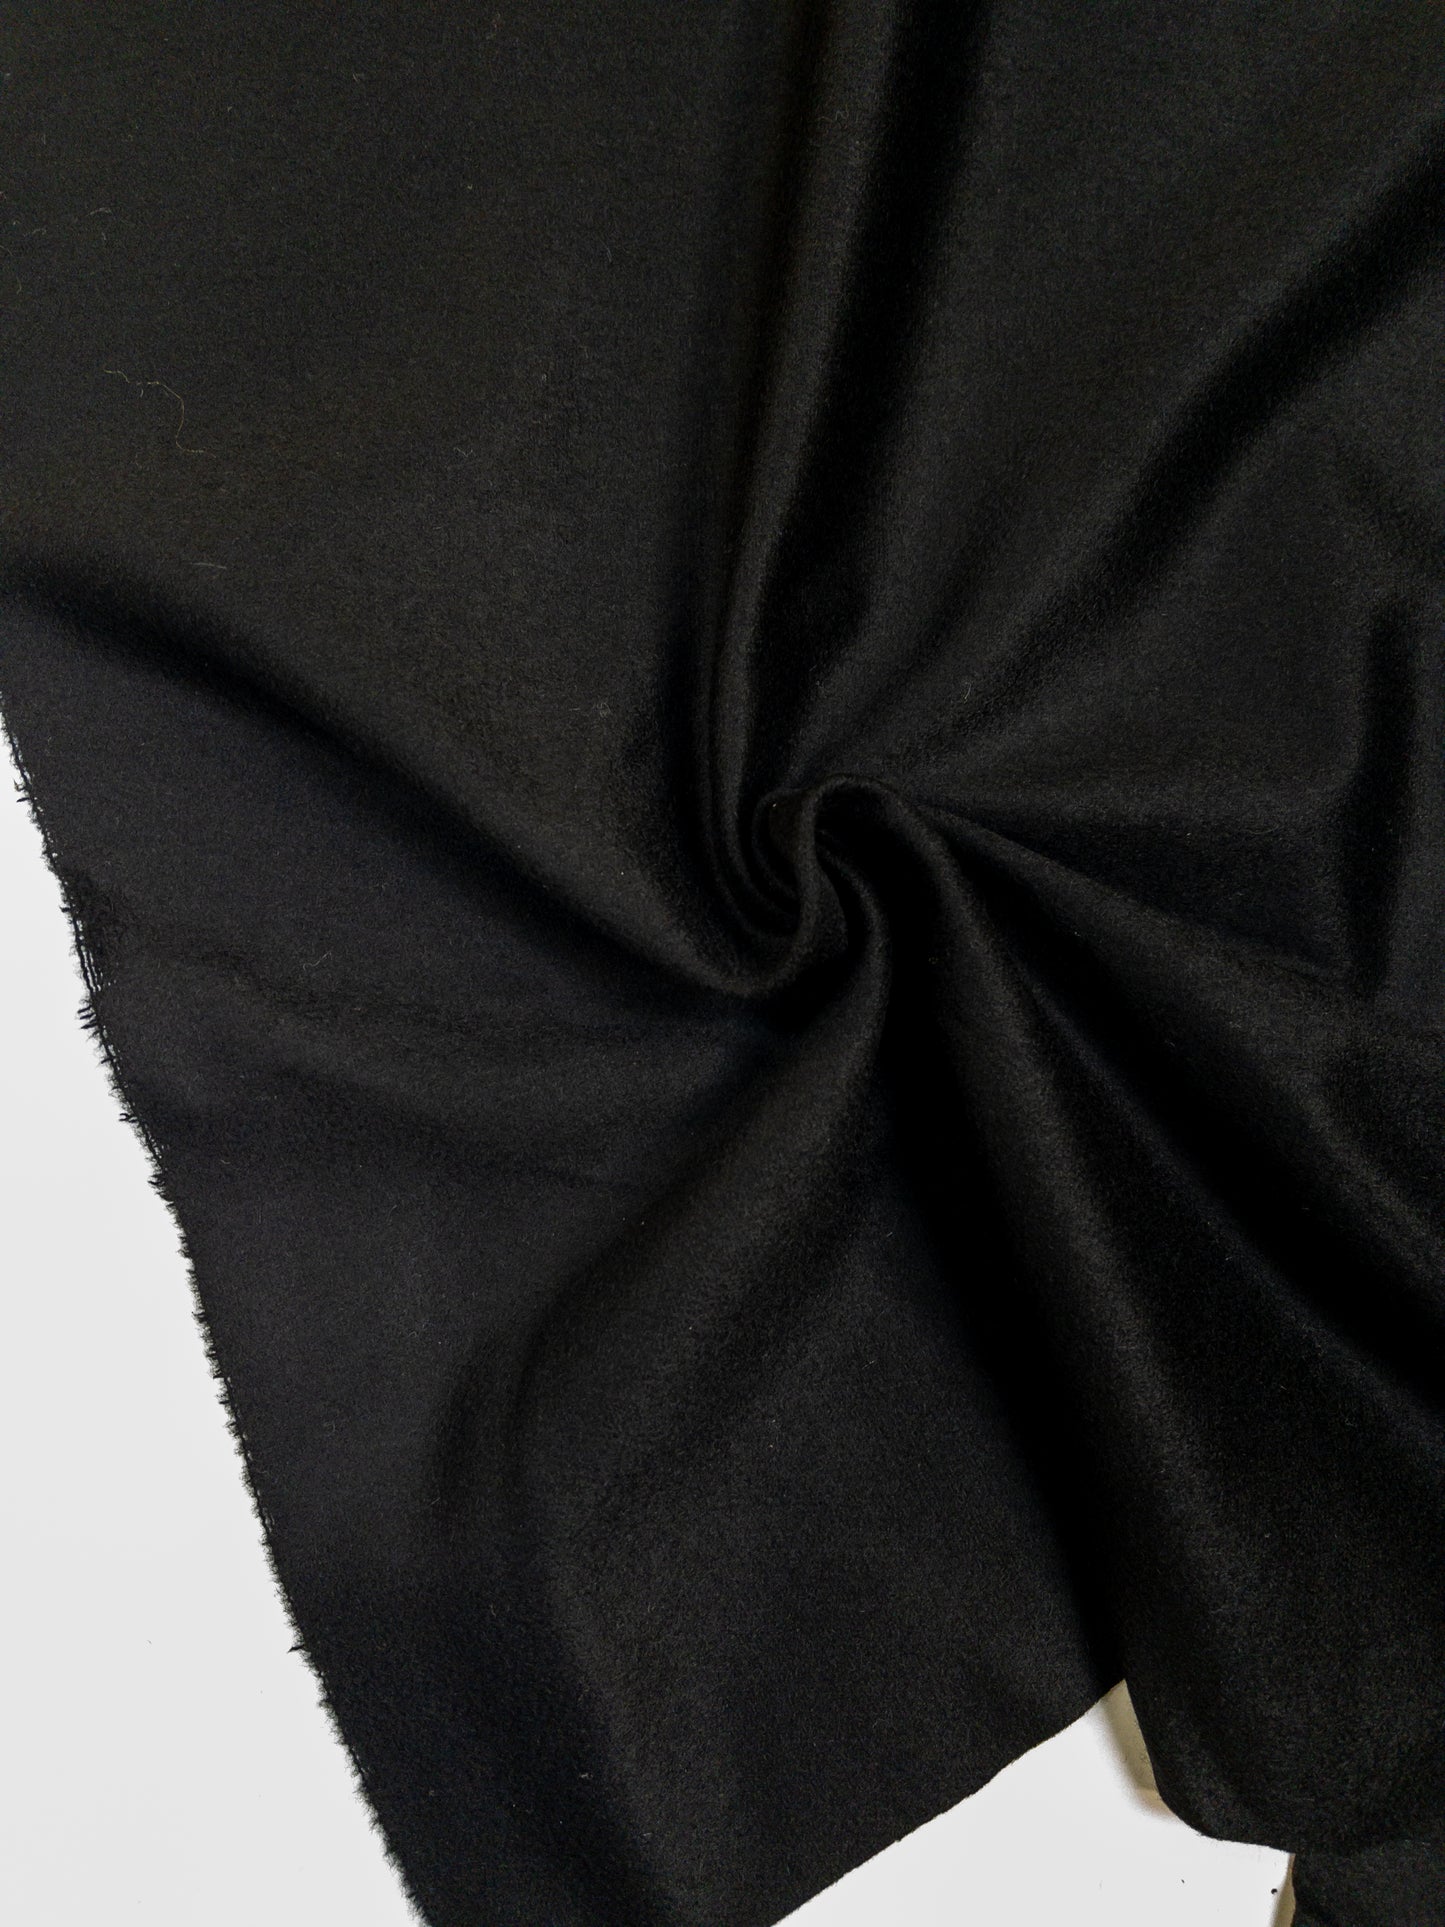 Wool fabric medium thickness color: Black WD19